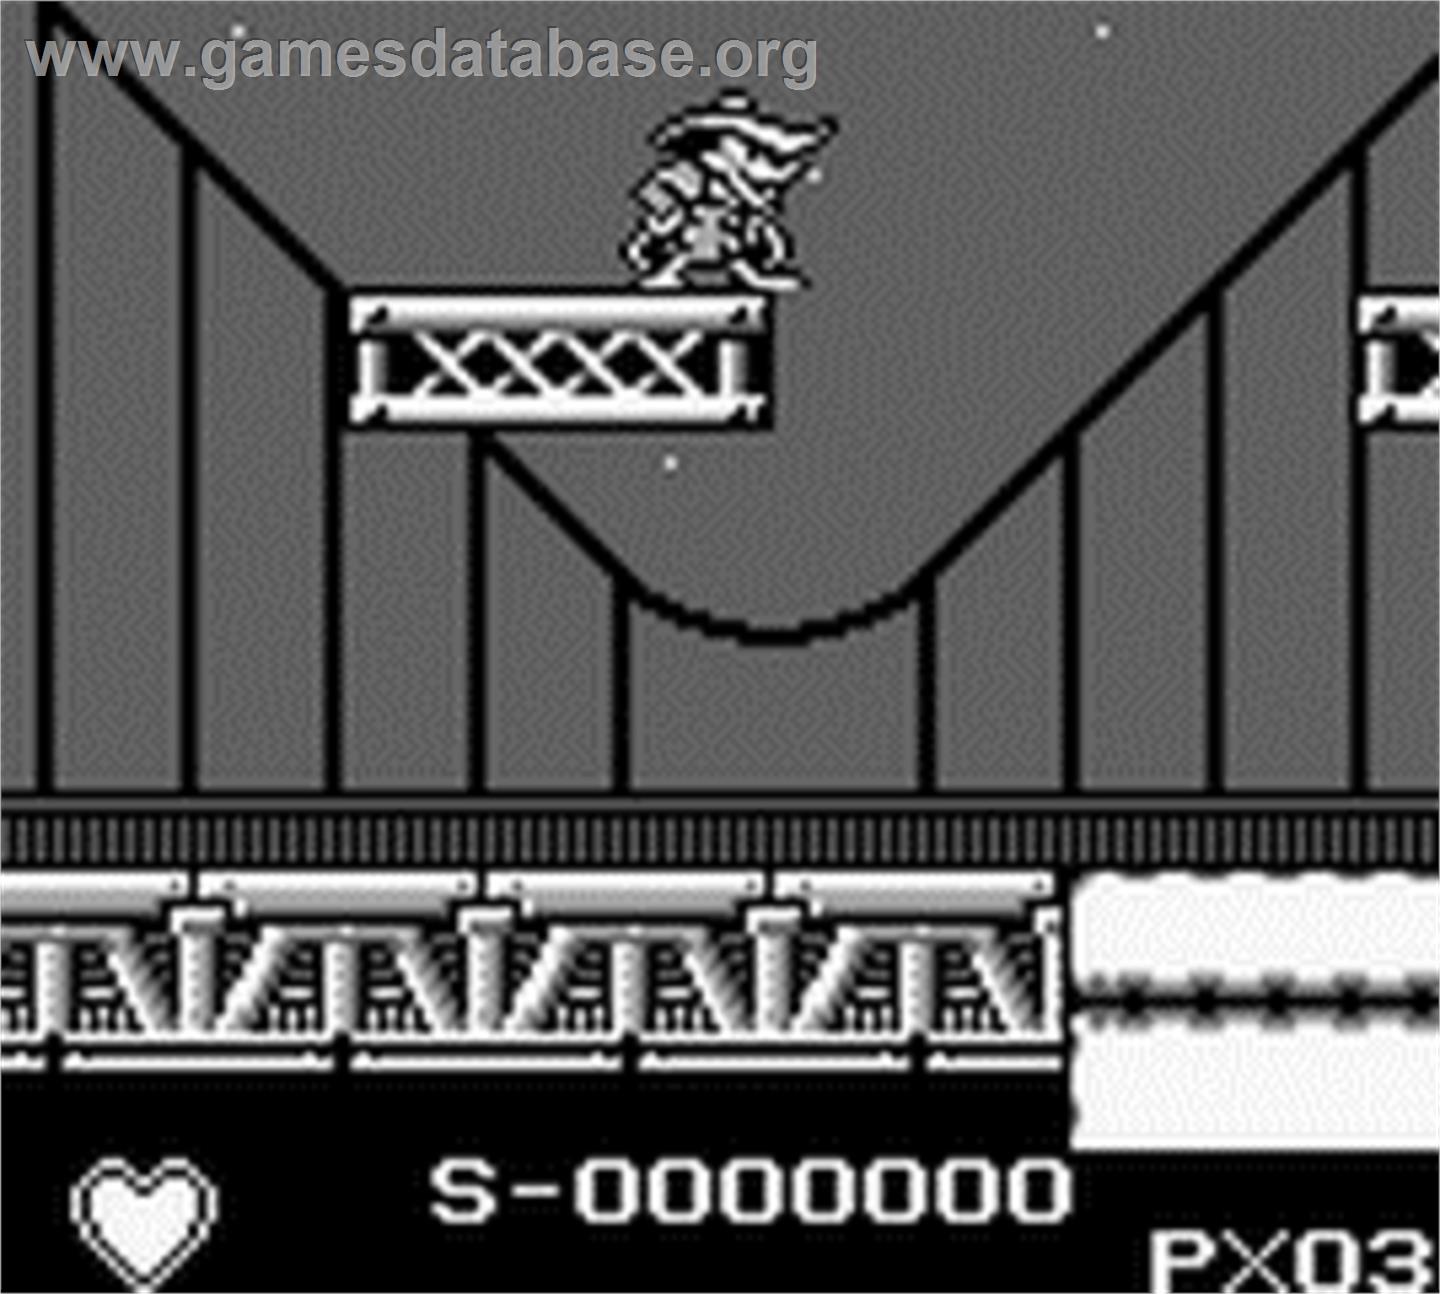 Darkwing Duck - Nintendo Game Boy - Artwork - In Game